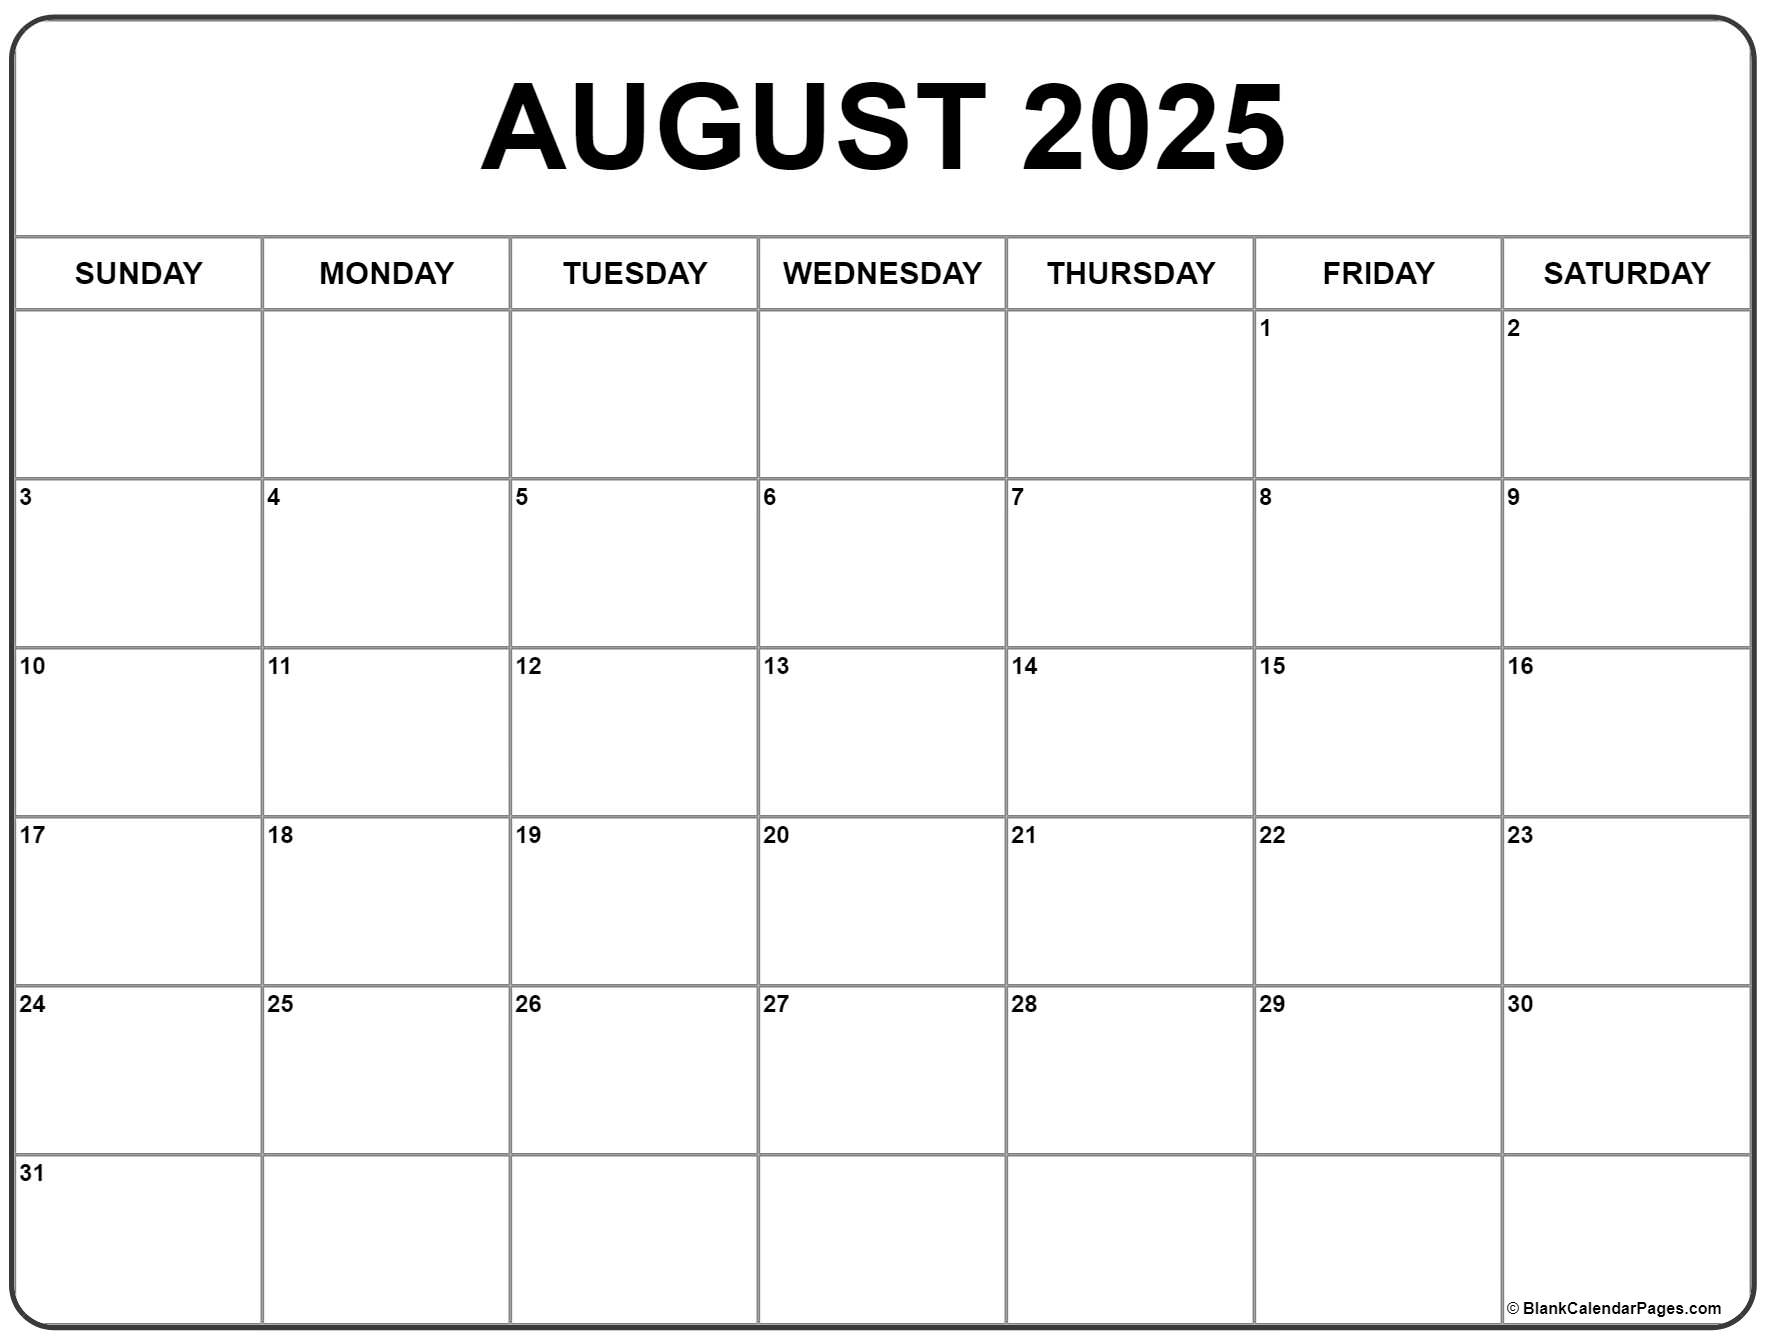 August 2025 Calendar | Free Printable Calendar for Free Printable August 2025